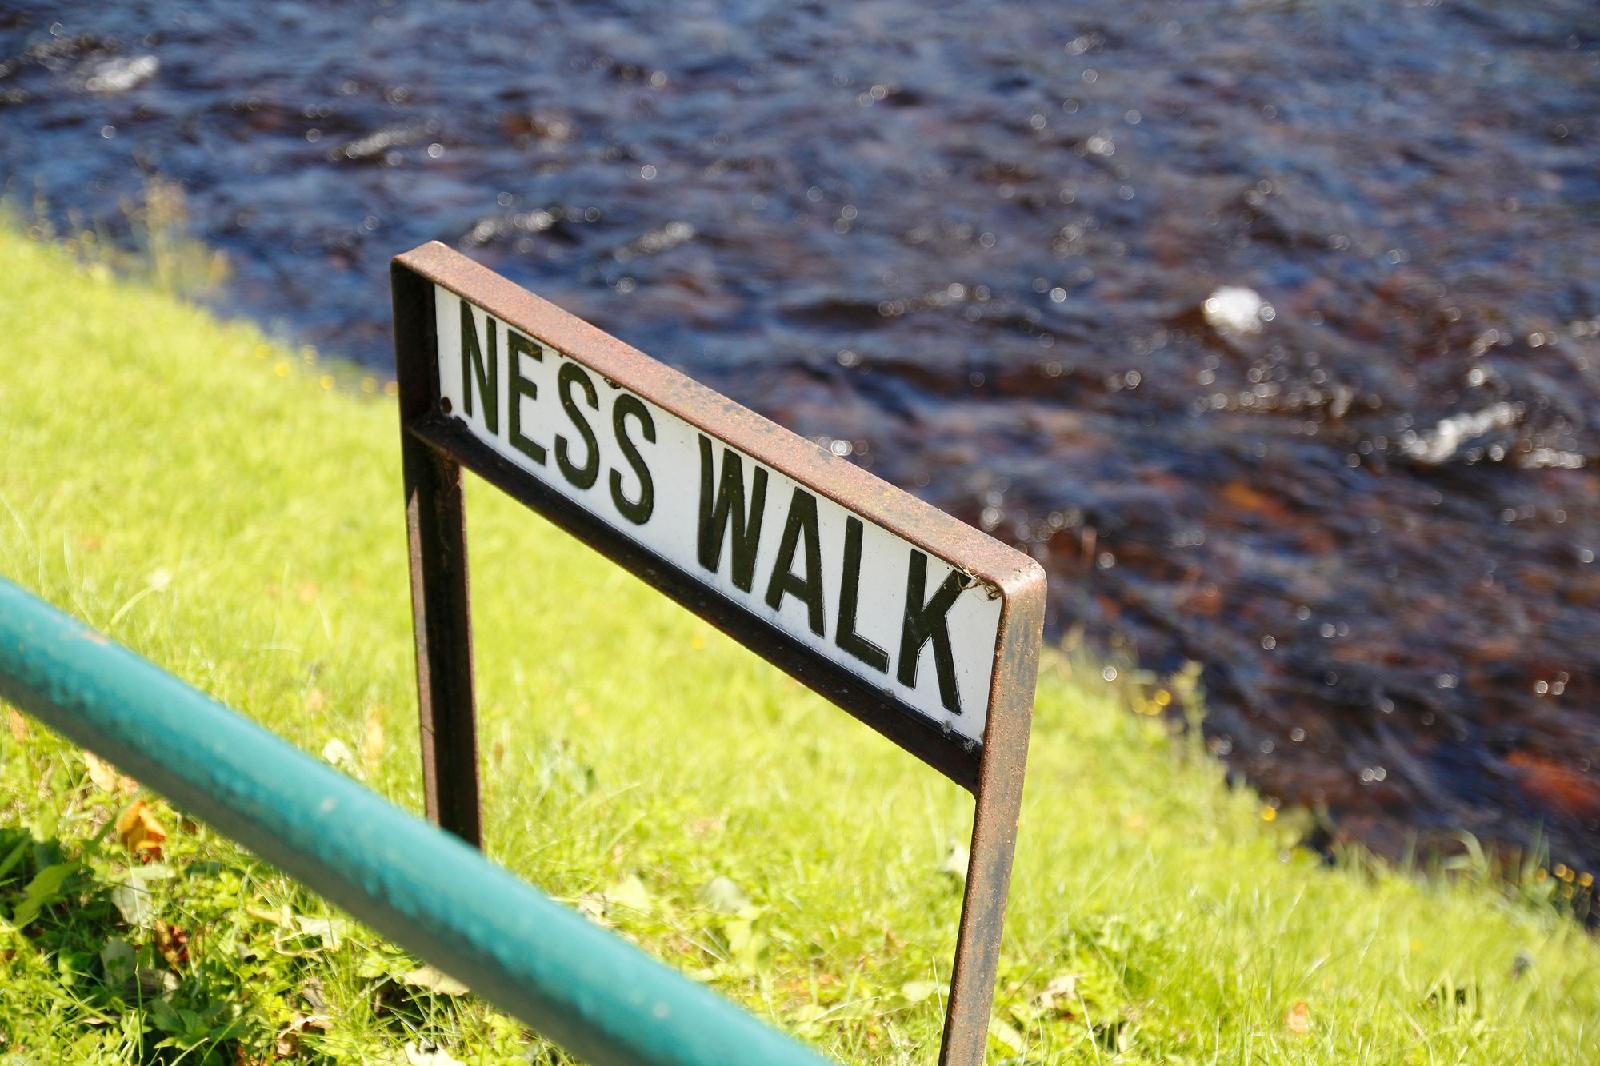 Ness Walk